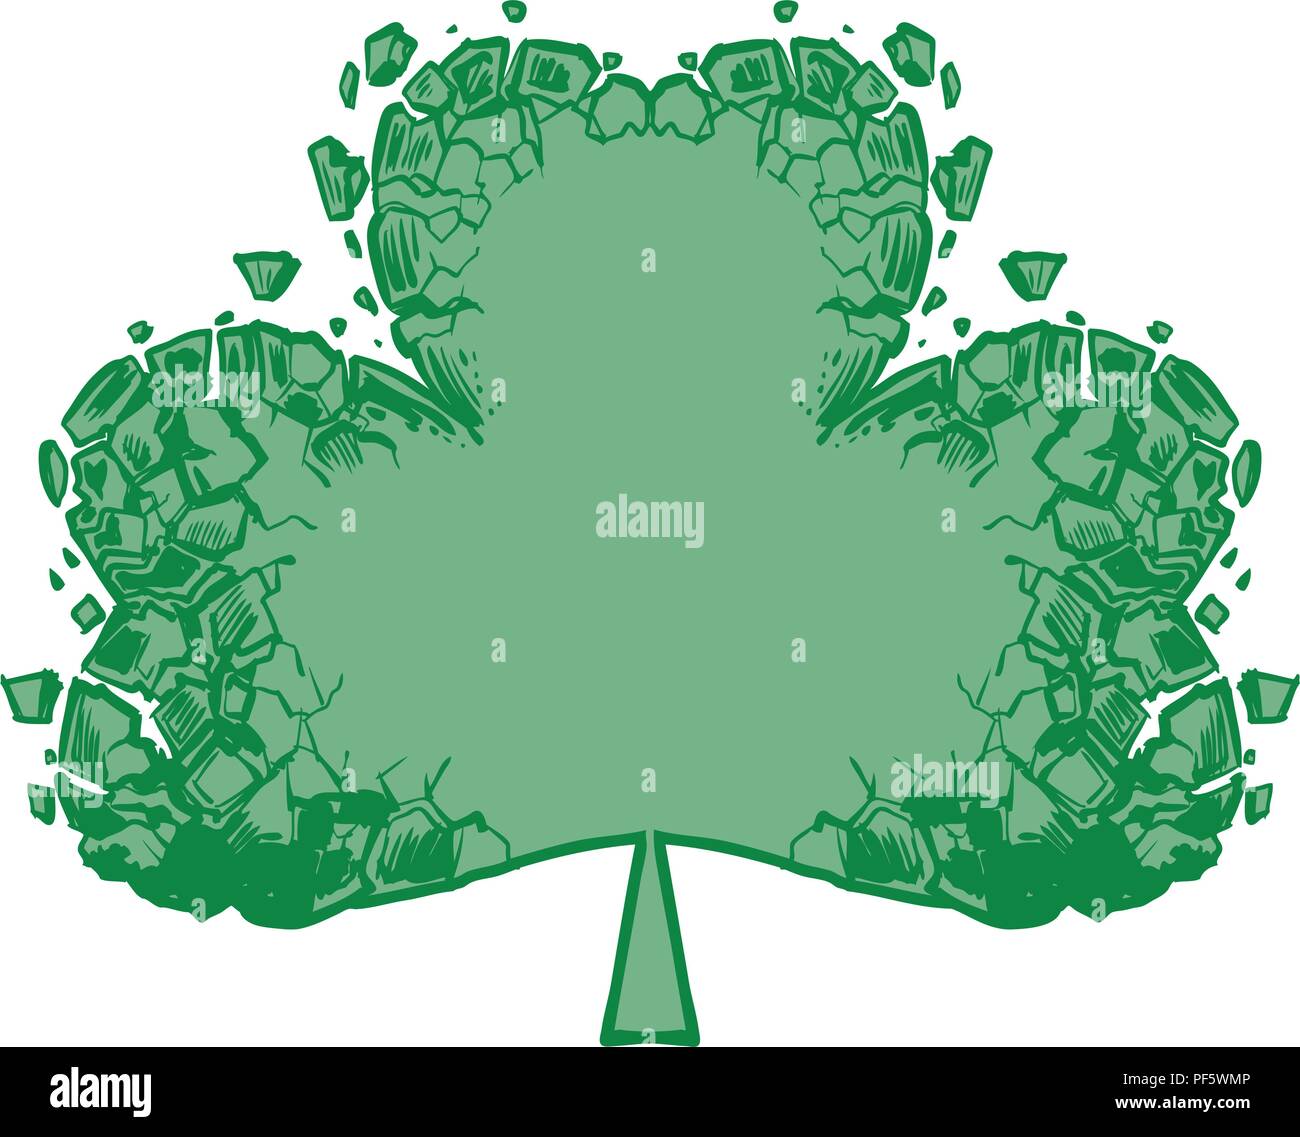 Vector cartoon clip art background template illustration of a shattering or crumbling green irish shamrock or clover. Stock Vector